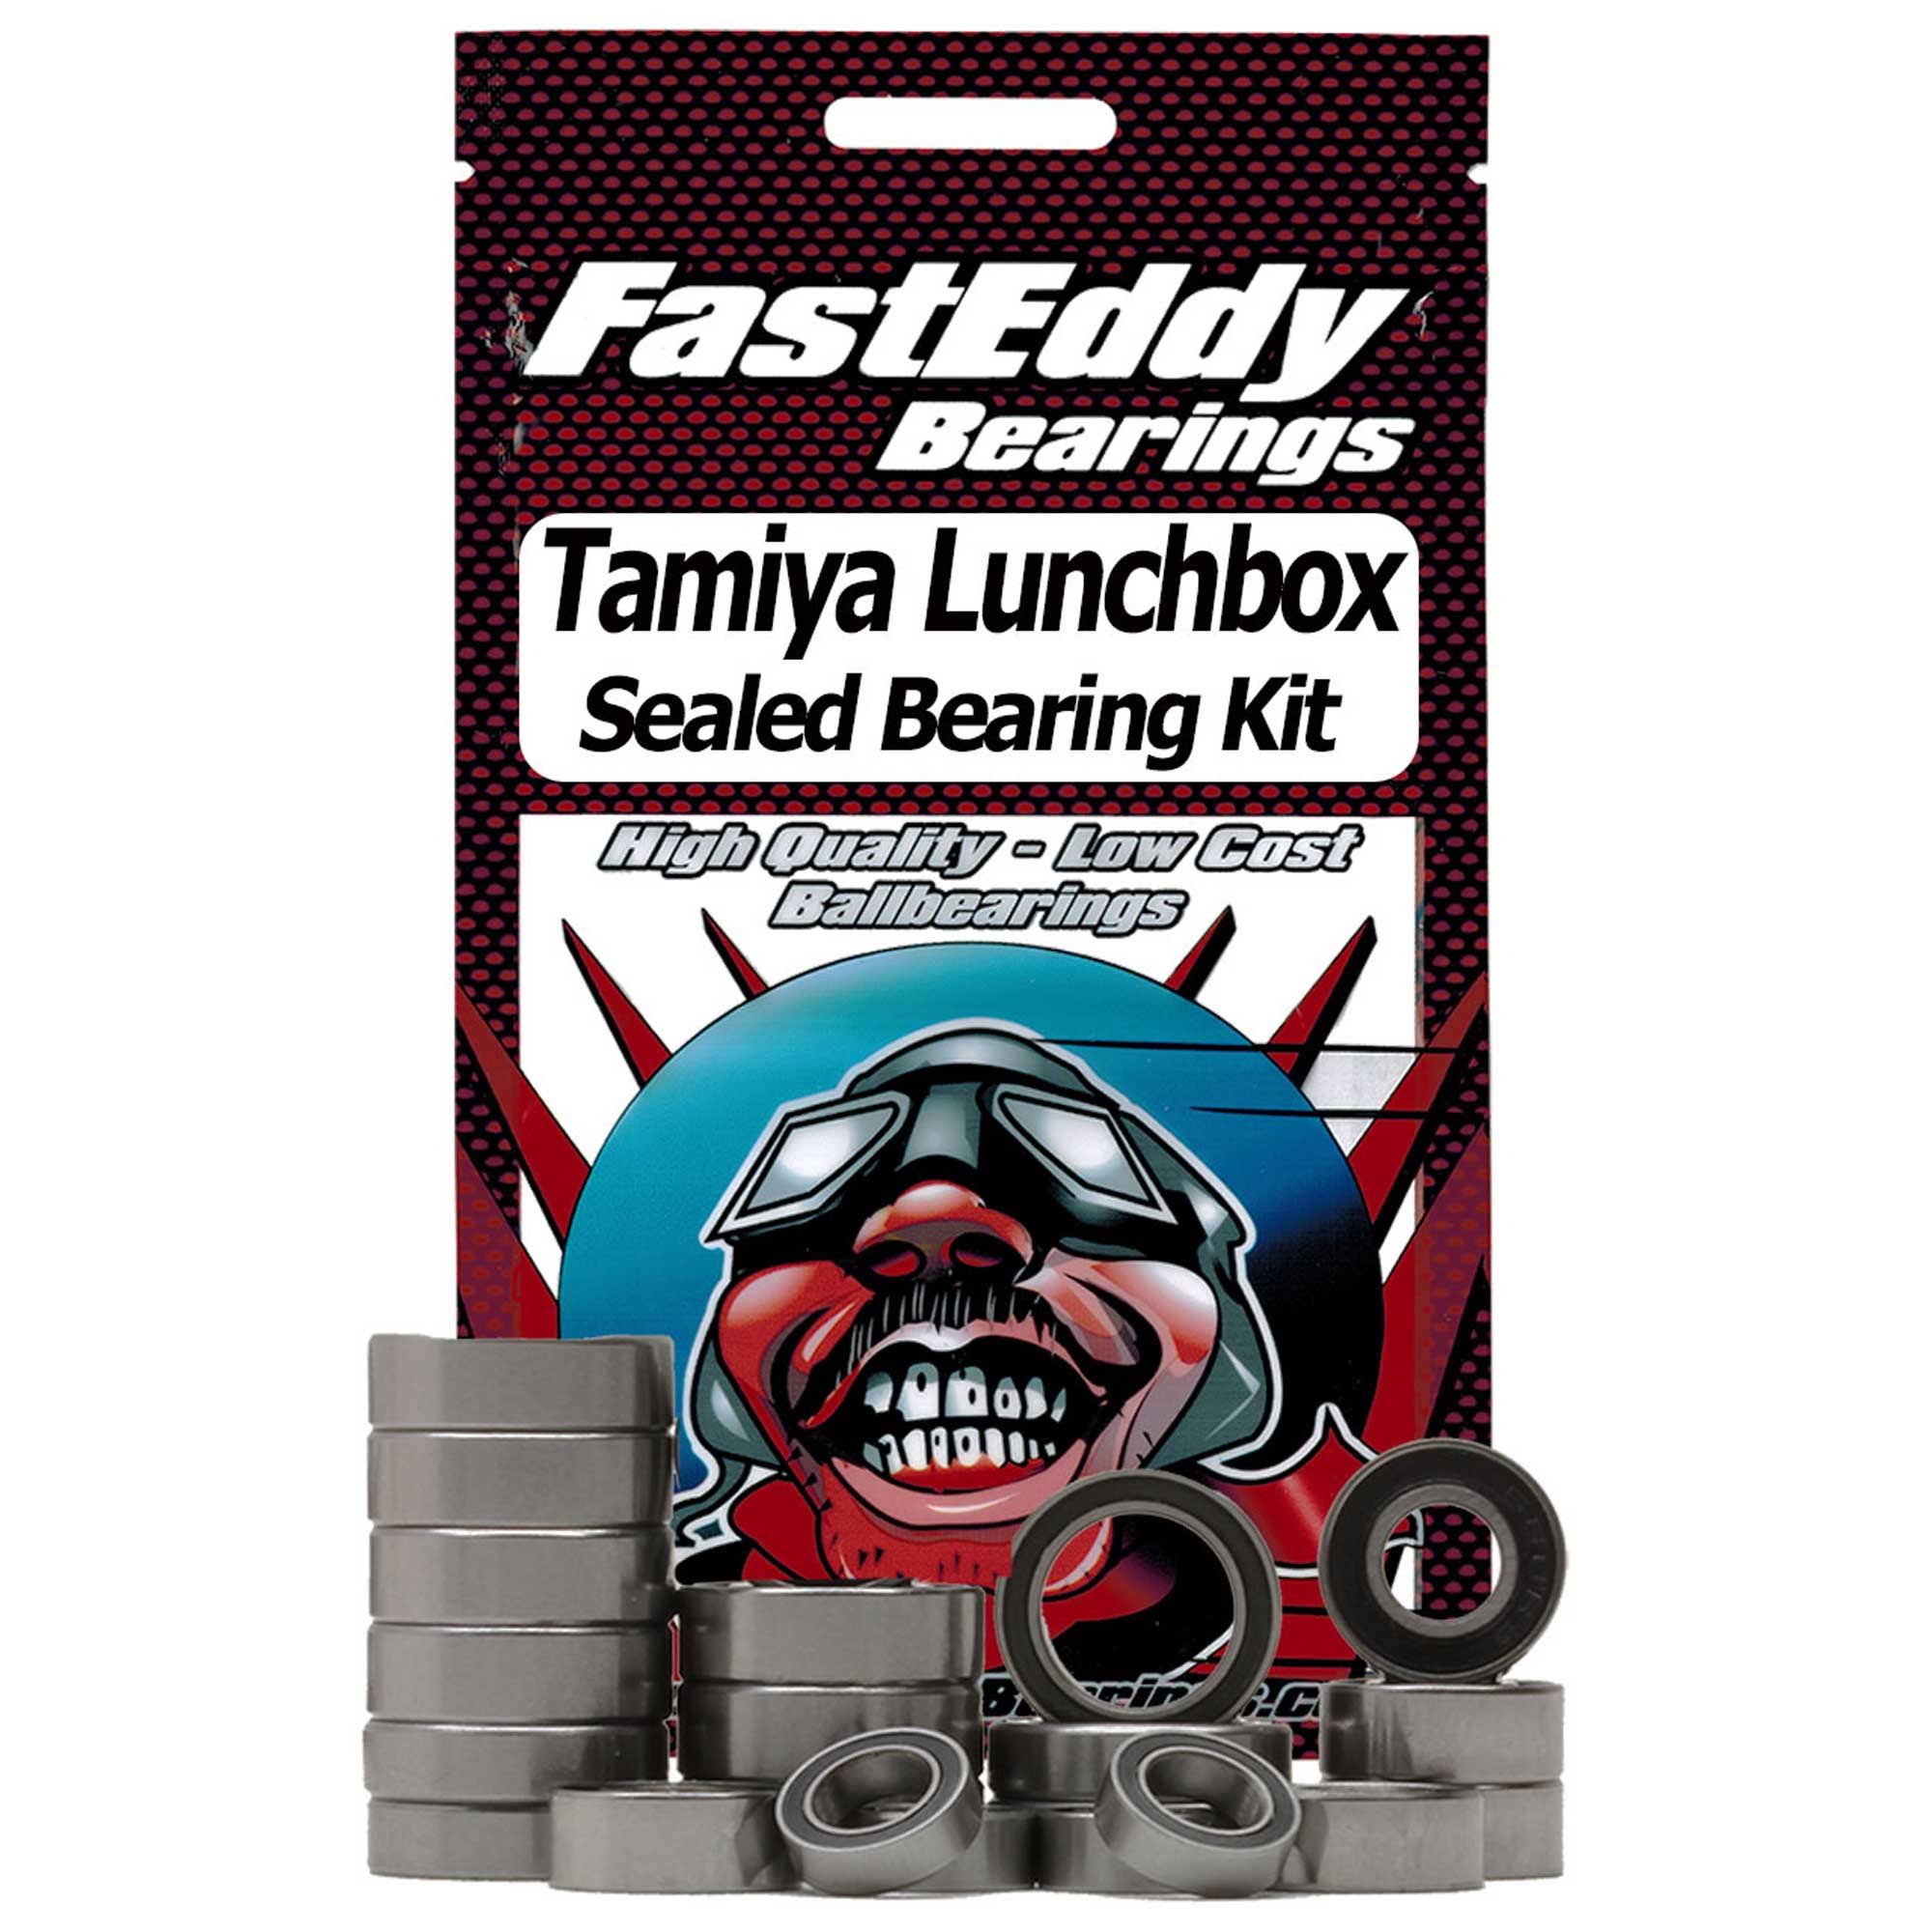 FastEddy TFE909 Tamiya Lunchbox 1/12th (58044) Sealed Bearing Kit